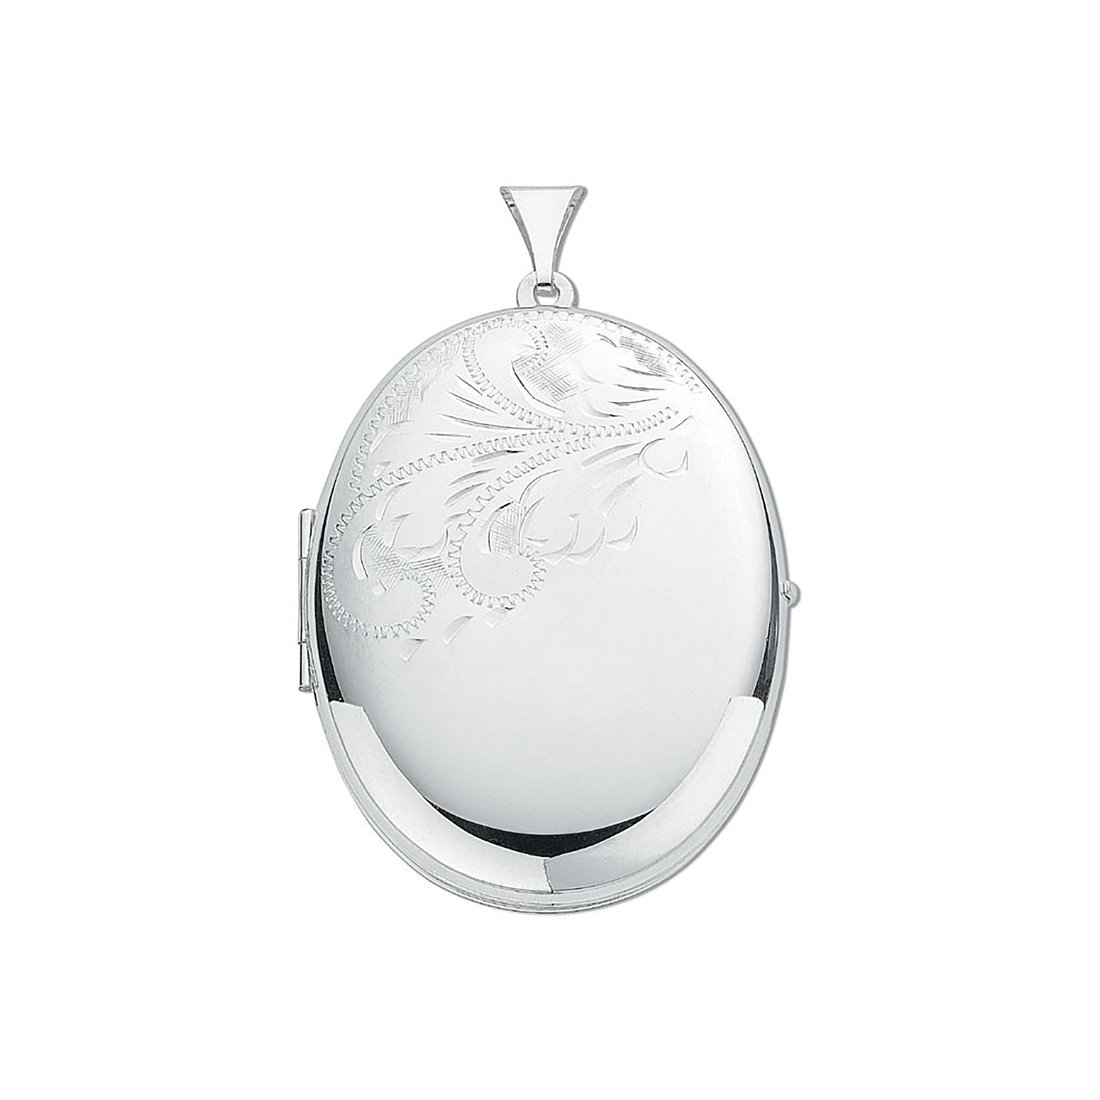 Silver Large Engraved Oval Shaped Locket — Medium (9.3g) - Robert Anthony Jewellers, Edinburgh